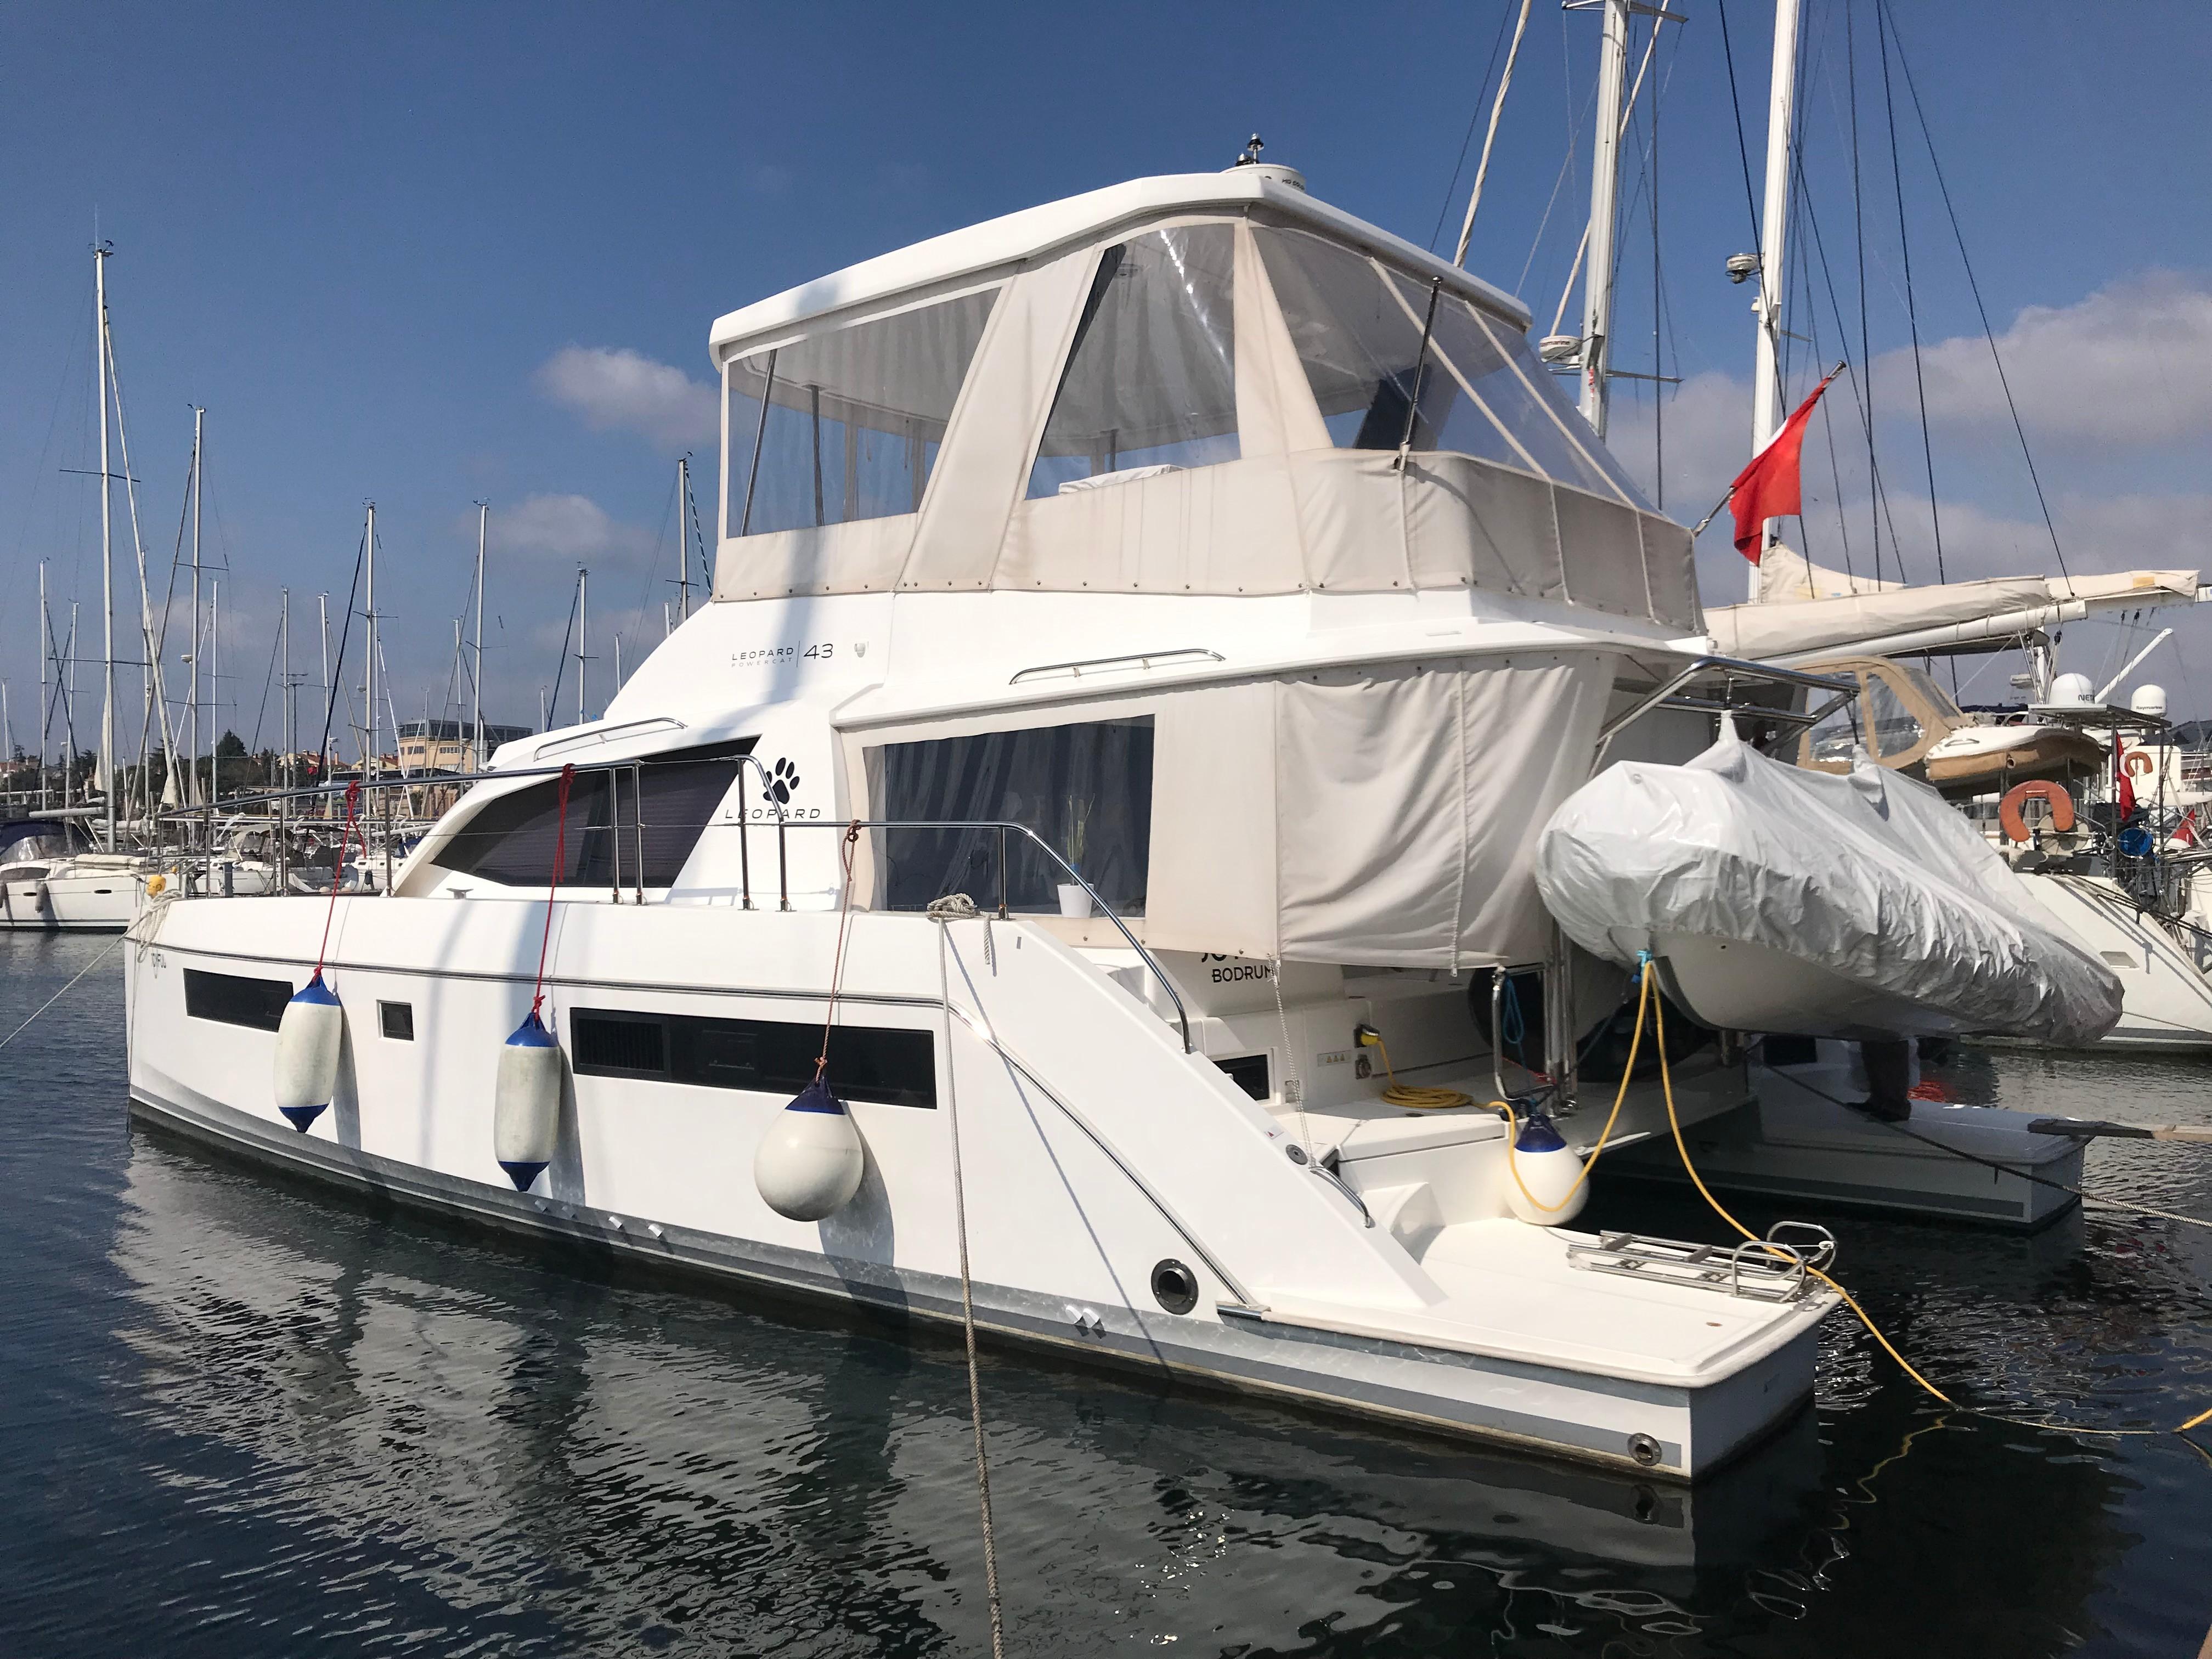 leopard catamaran for sale uk